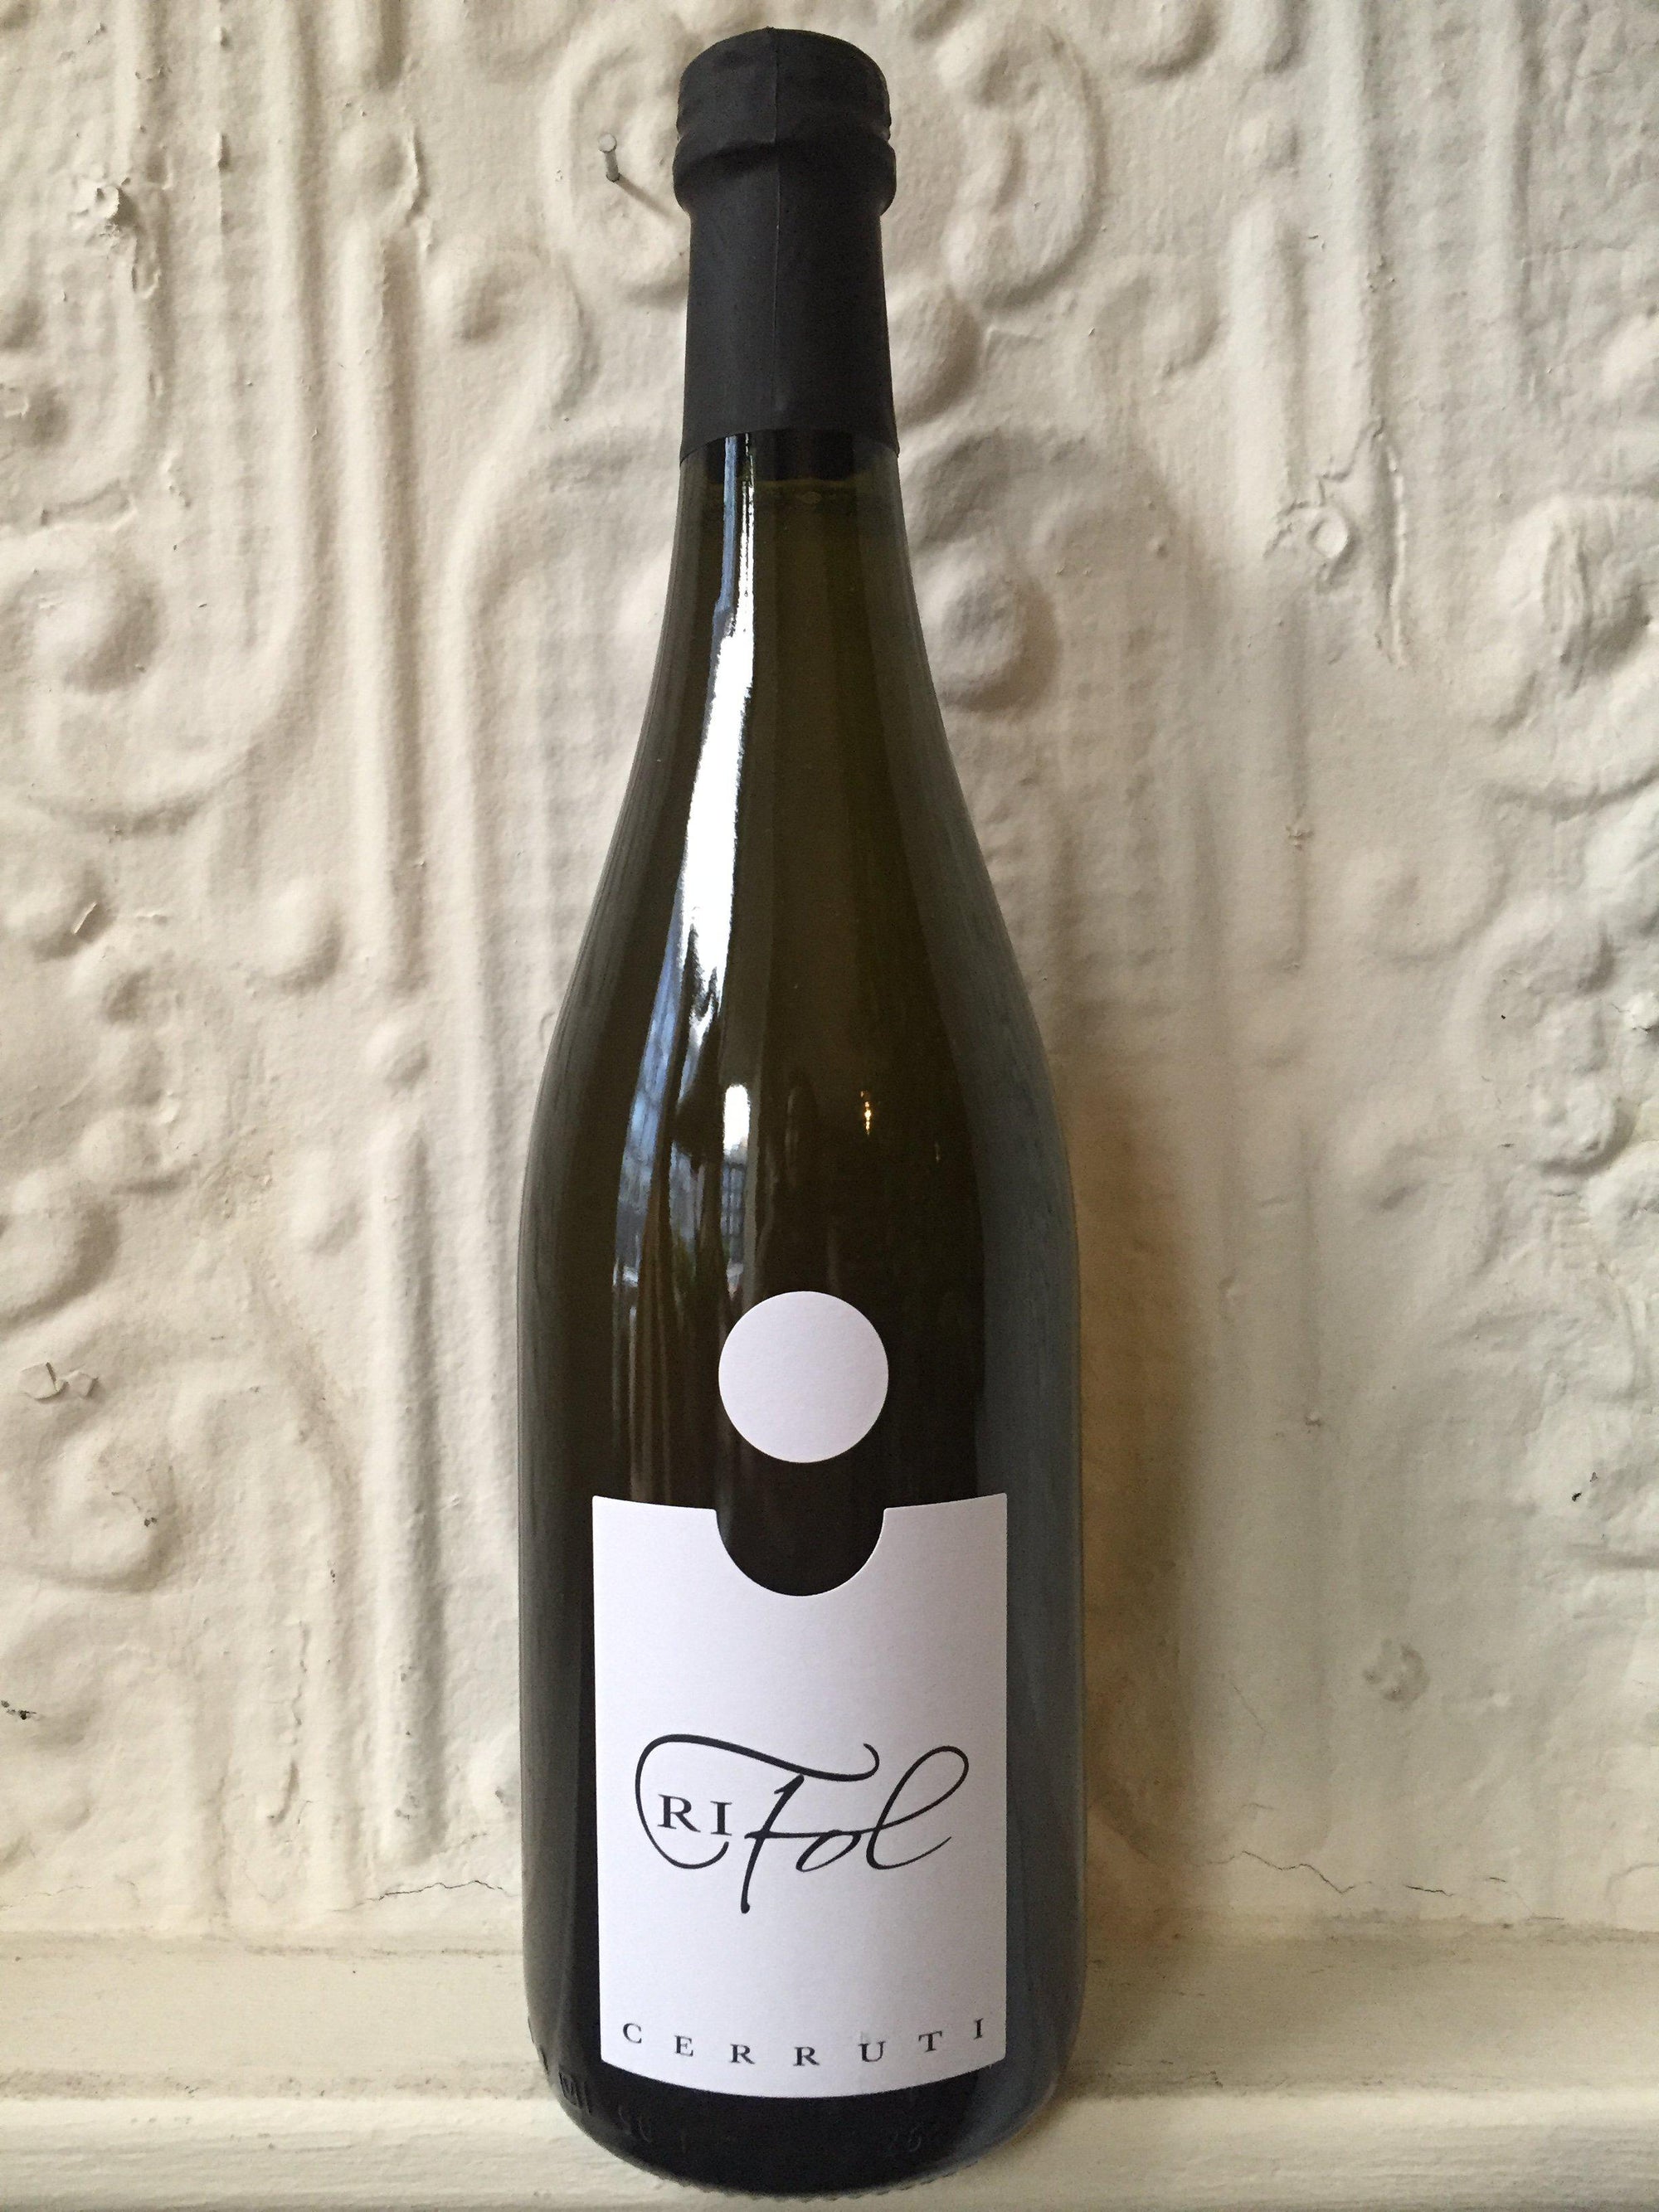 Dry Moscato "Rifol", Ezio Cerruti 2019 (Piedmont, Italy)-Wine-Bibber & Bell